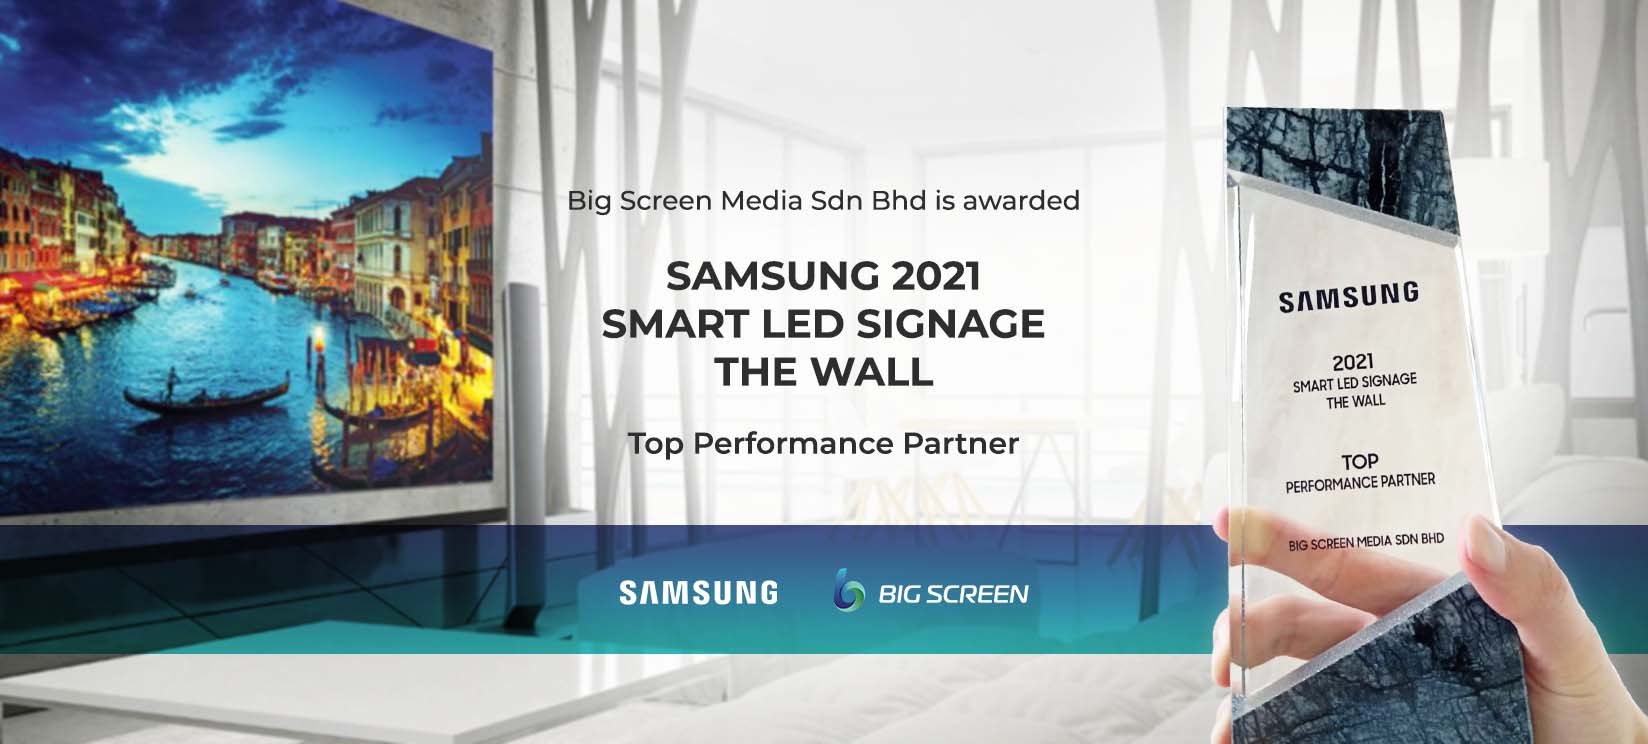 Samsung 2021 Smart LED Signage & The Wall - Top Performance Partner - Big Screen Media